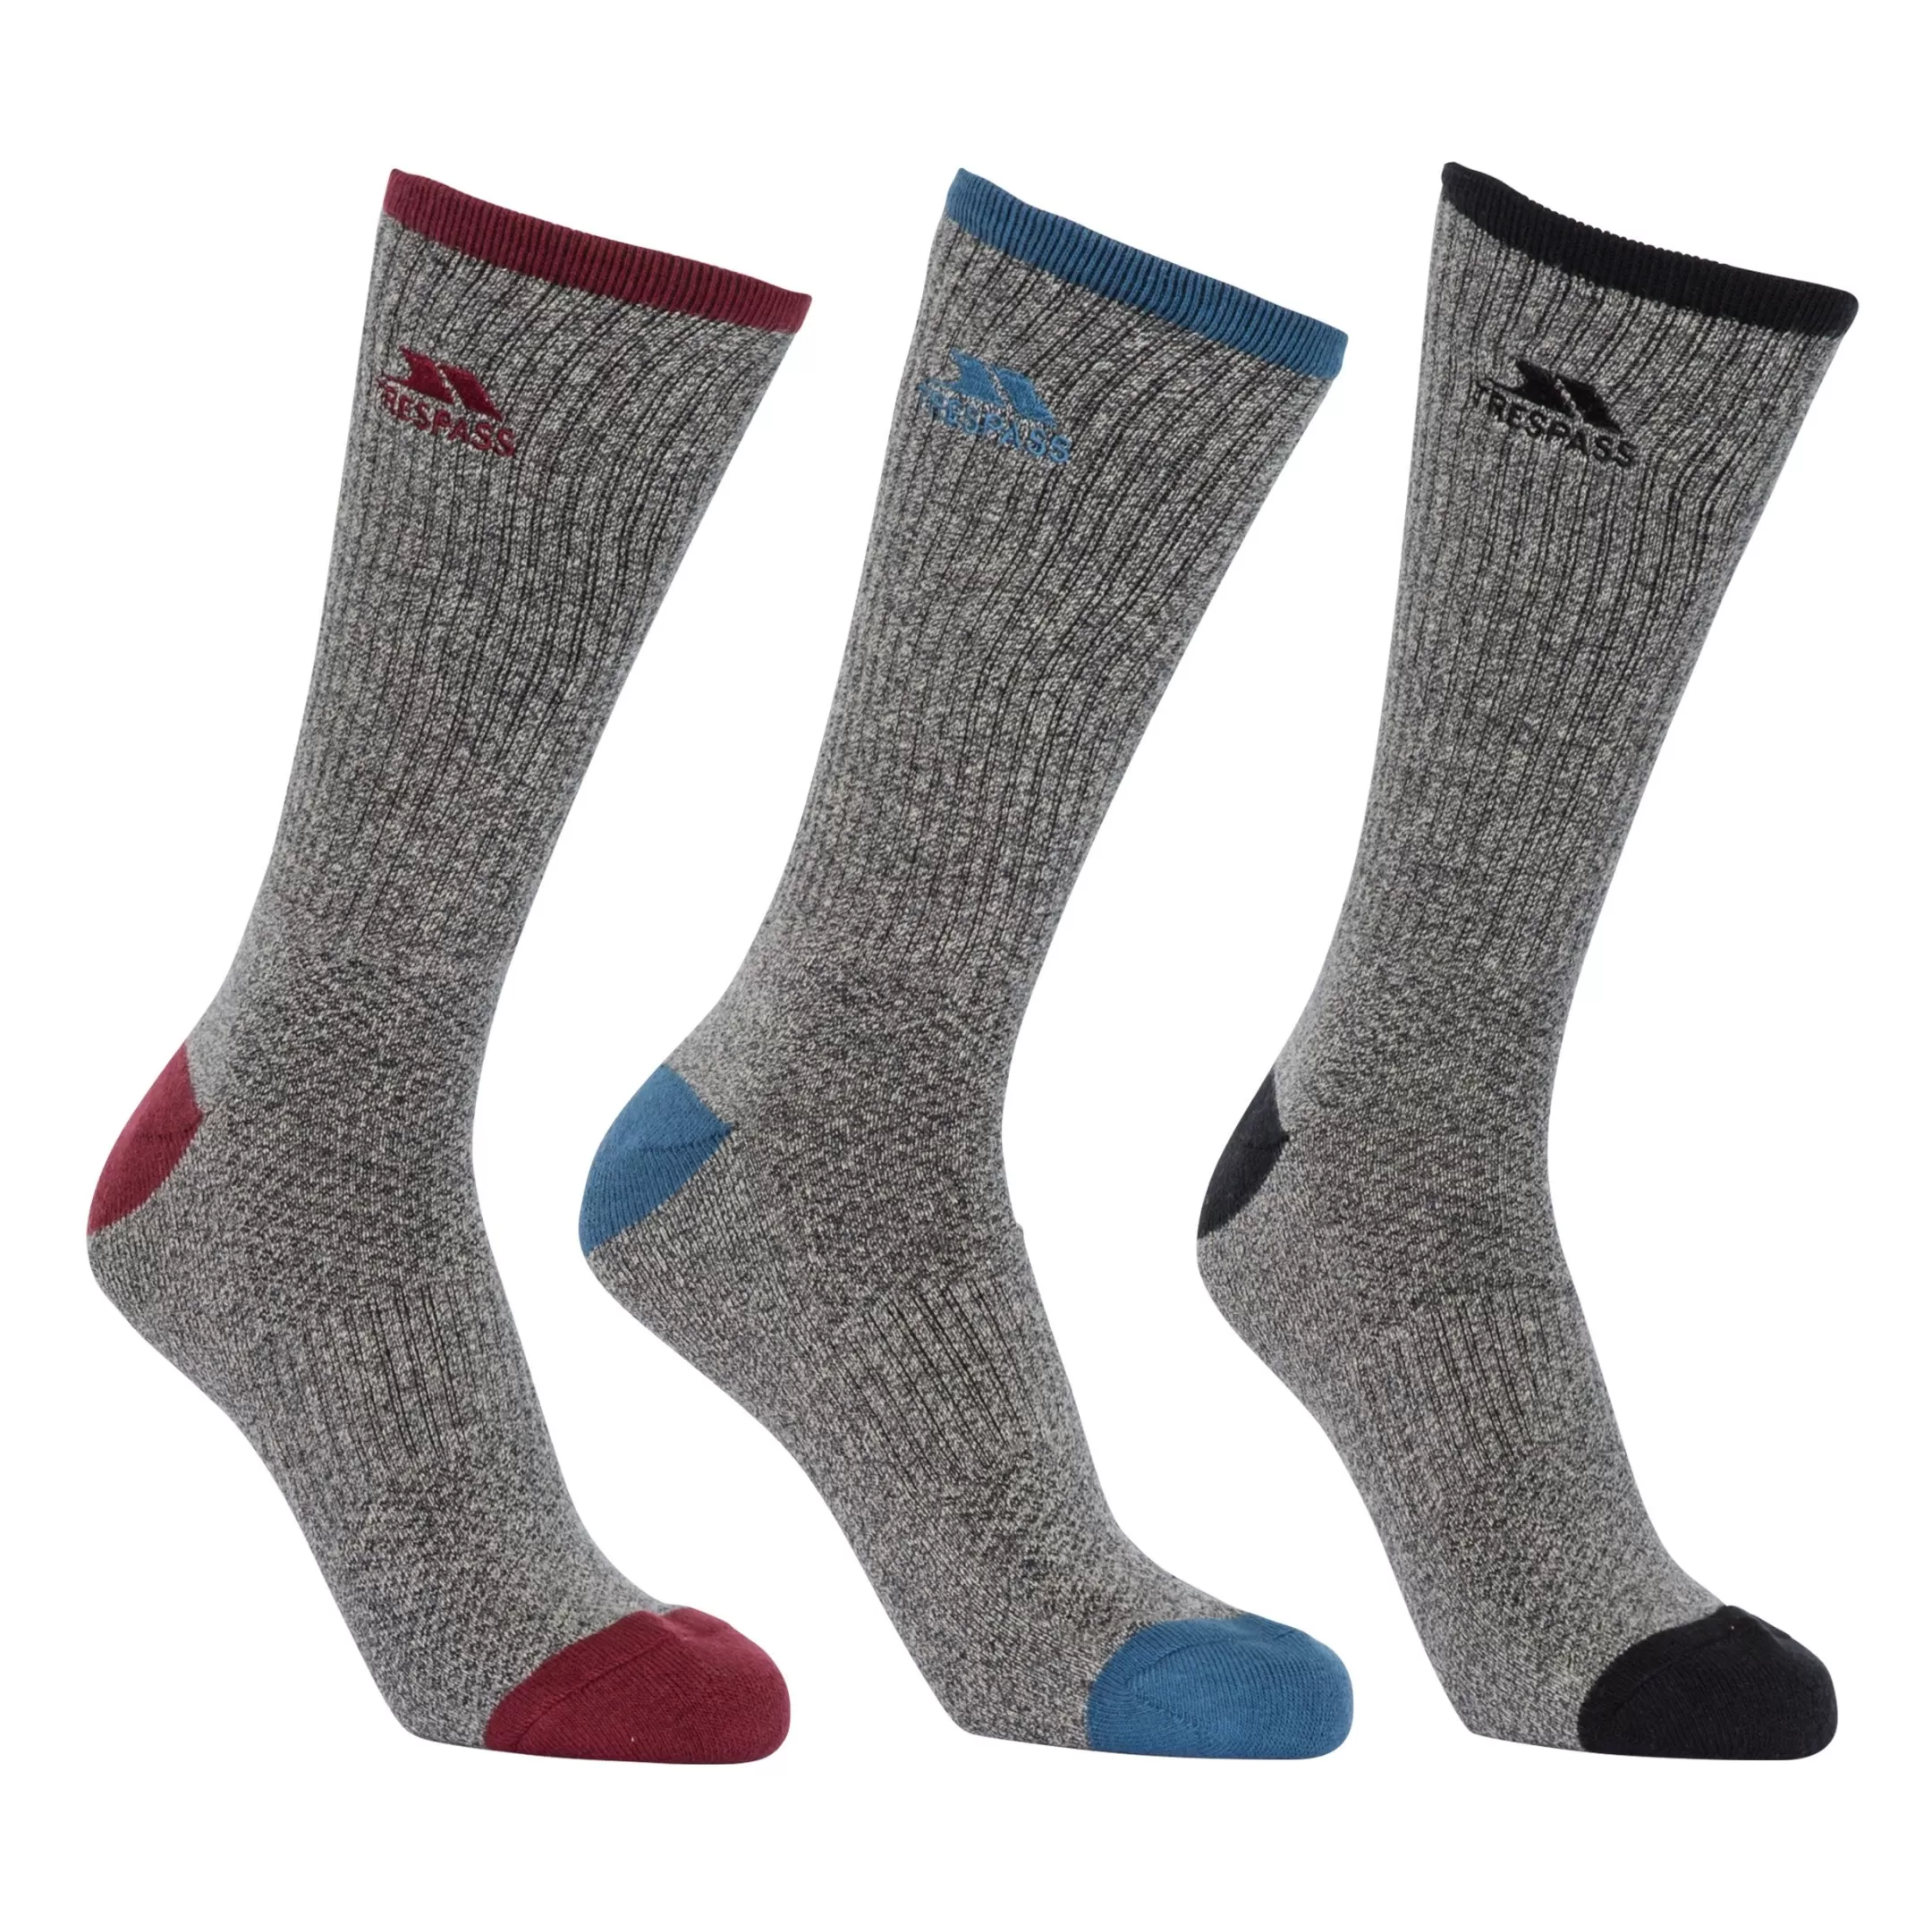 Men's Quick Dry Socks - 3 Pack Radulf | Trespass Flash Sale